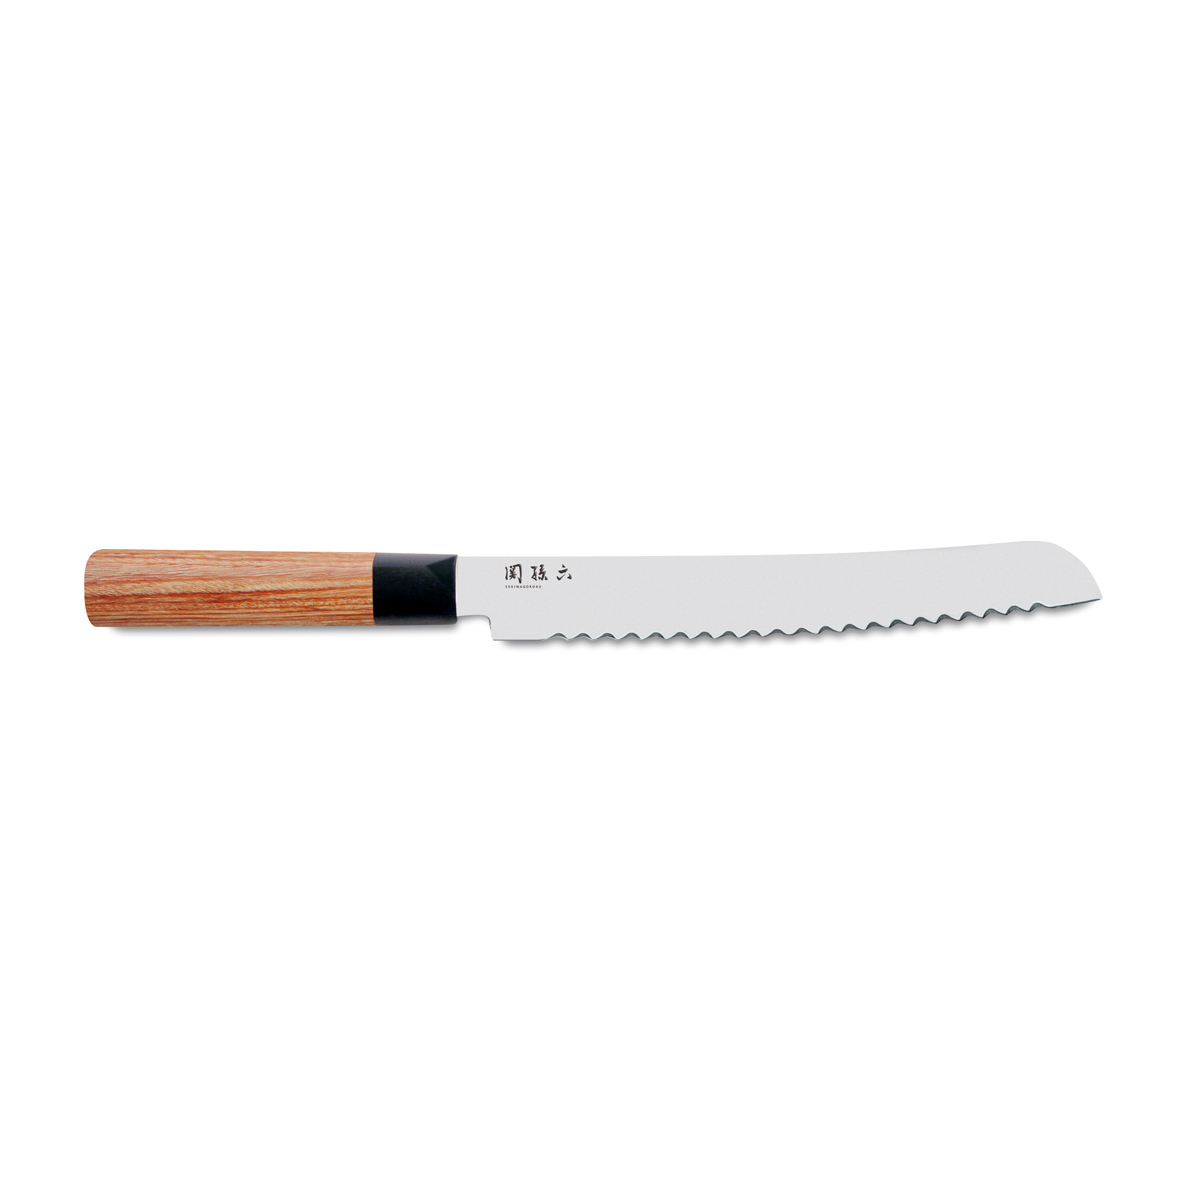 KAI Seki Magoroku Redwood Brotmesser 22,5 cm / Carbon 1K6 Edelstahl mit Pakkaholz-Griff